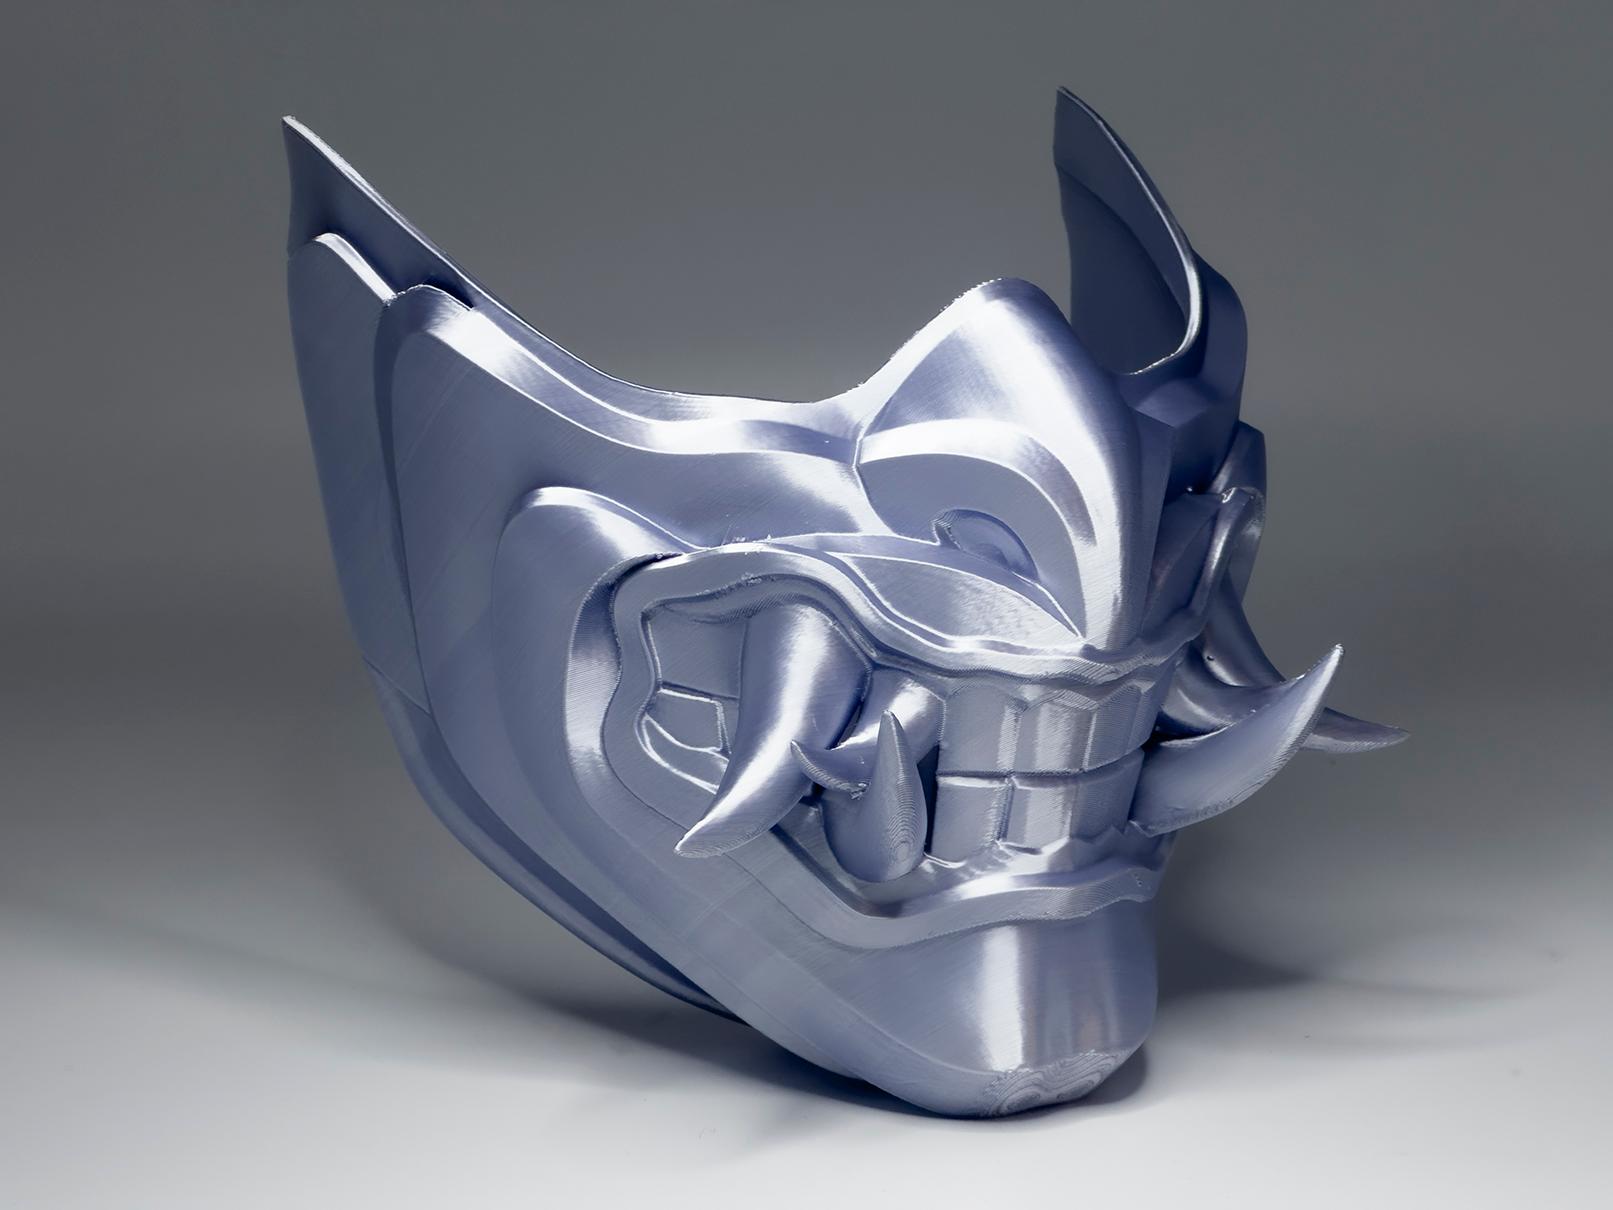 SIlver Samurai Mask 3d model